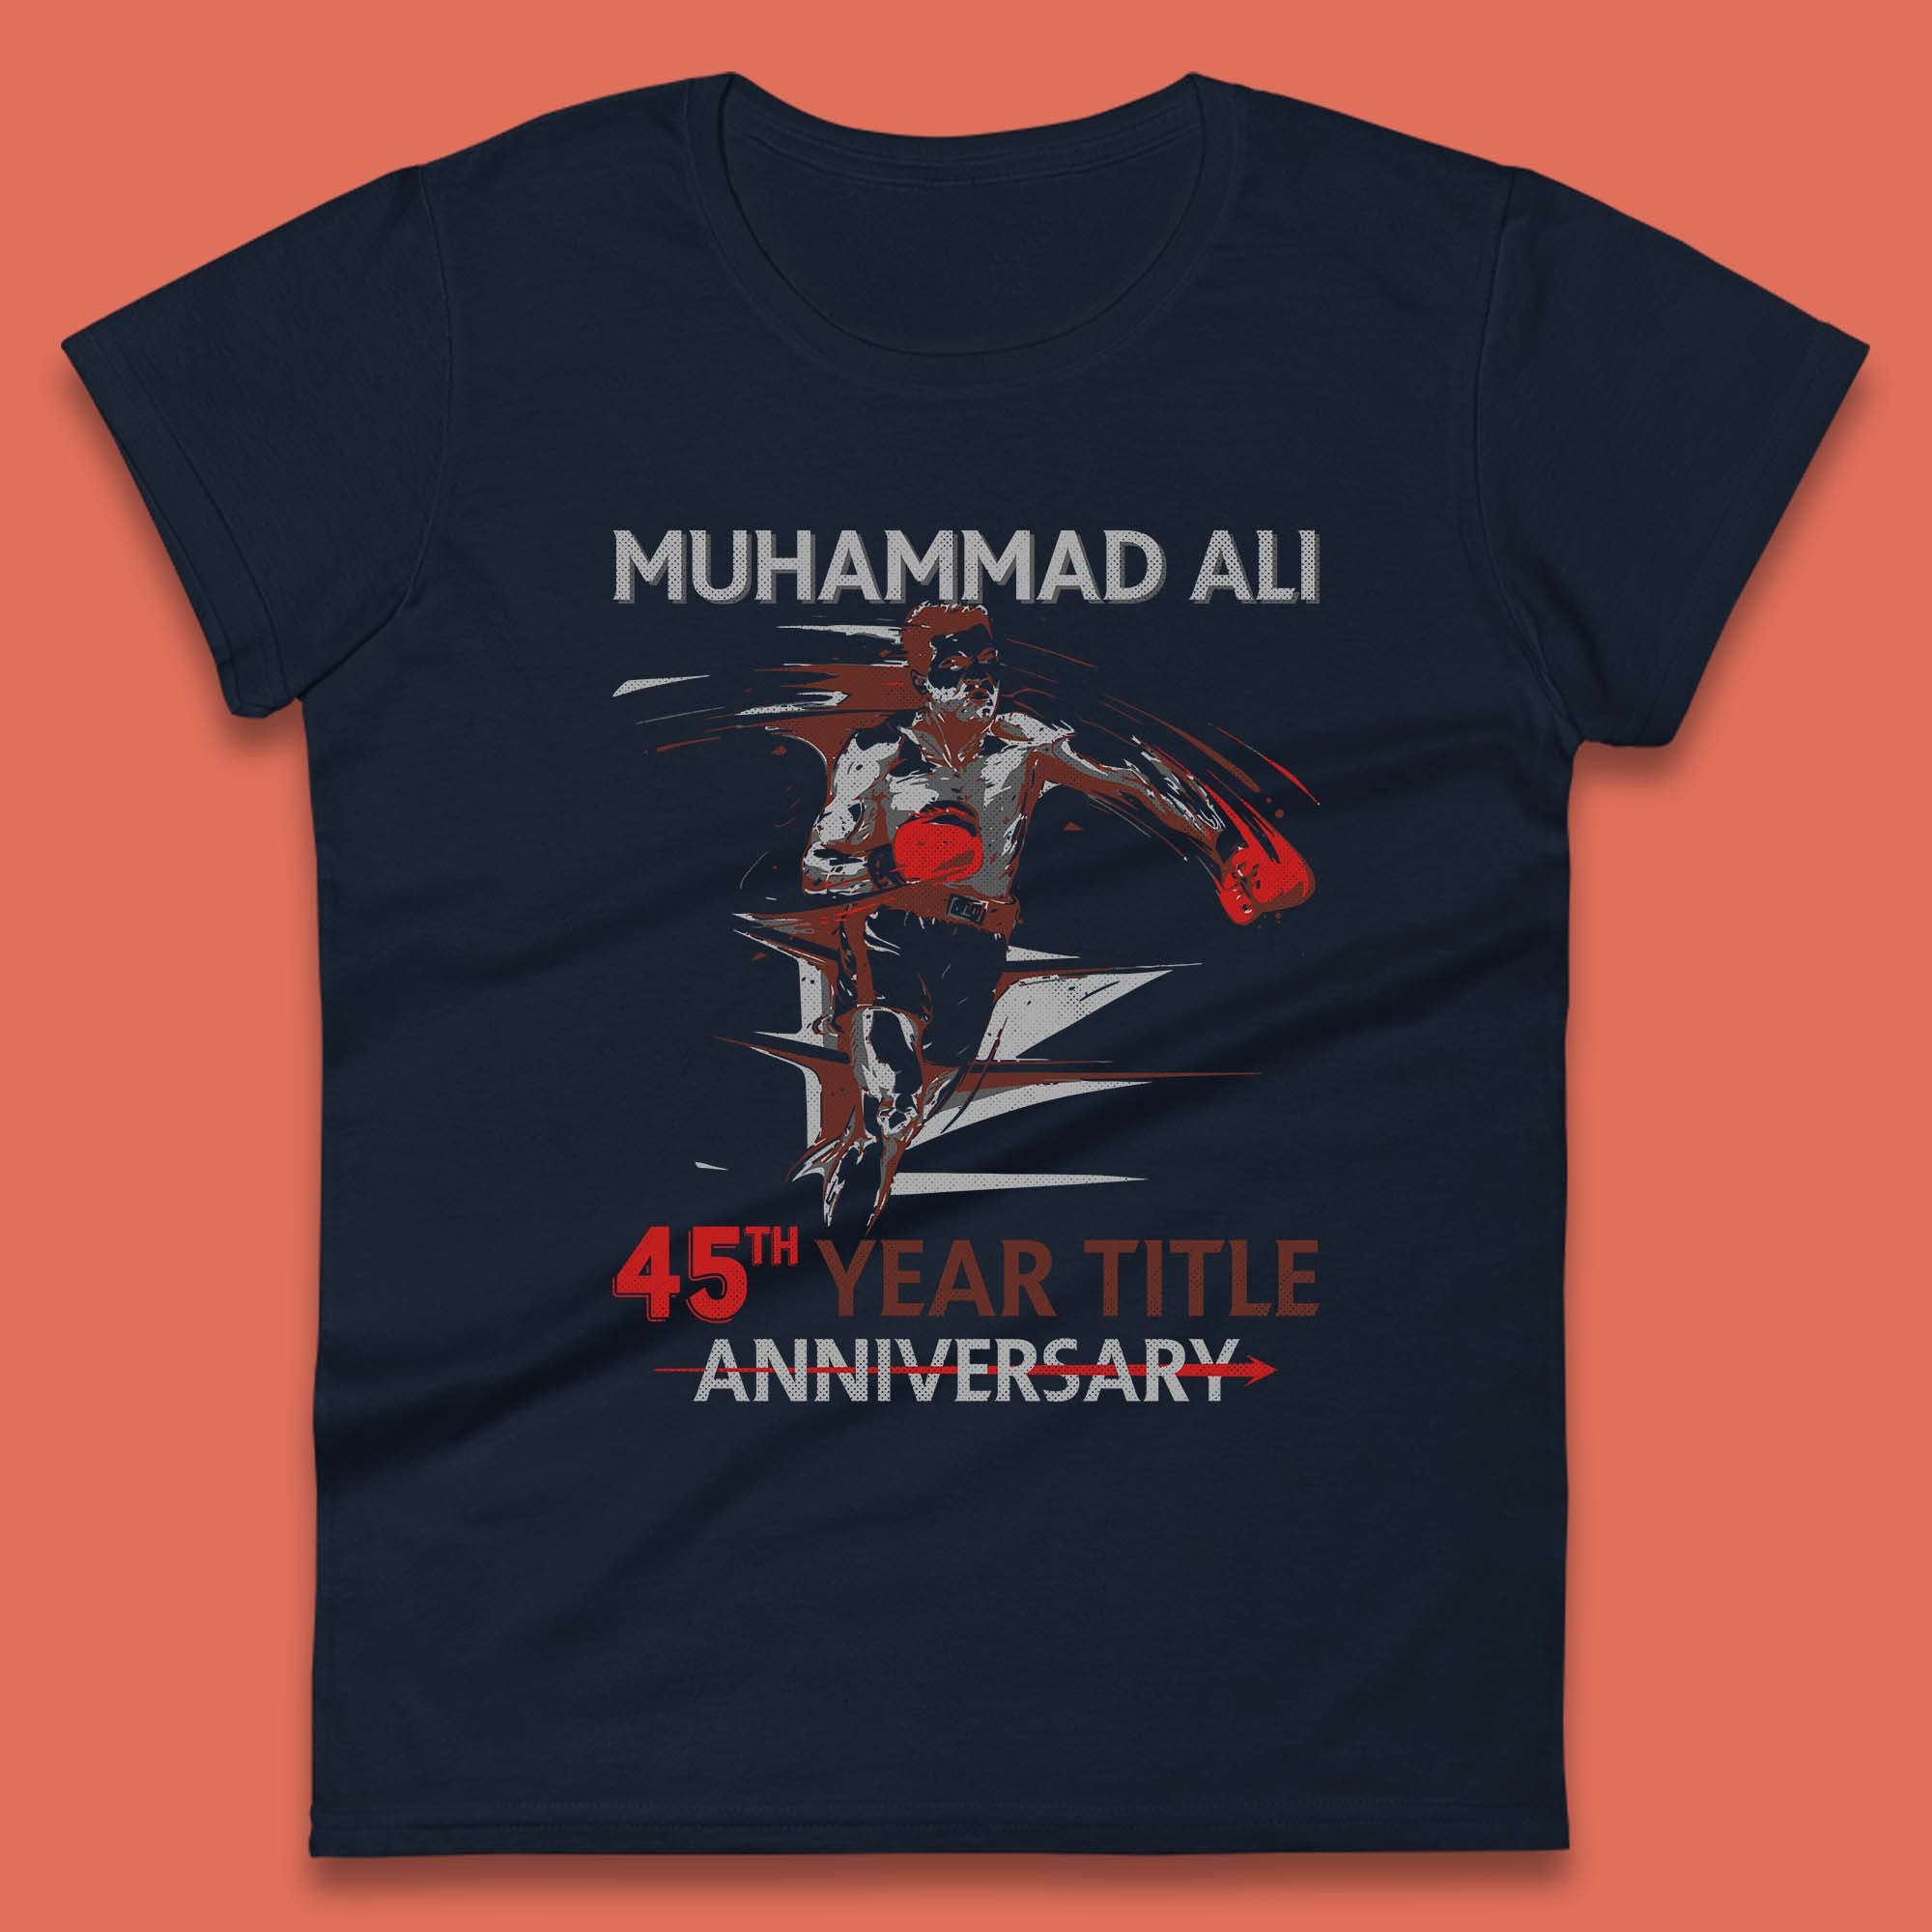 Muhammad Ali 45th Year Title Anniversary World Boxing Champion American Heavyweight Boxer Womens Tee Top